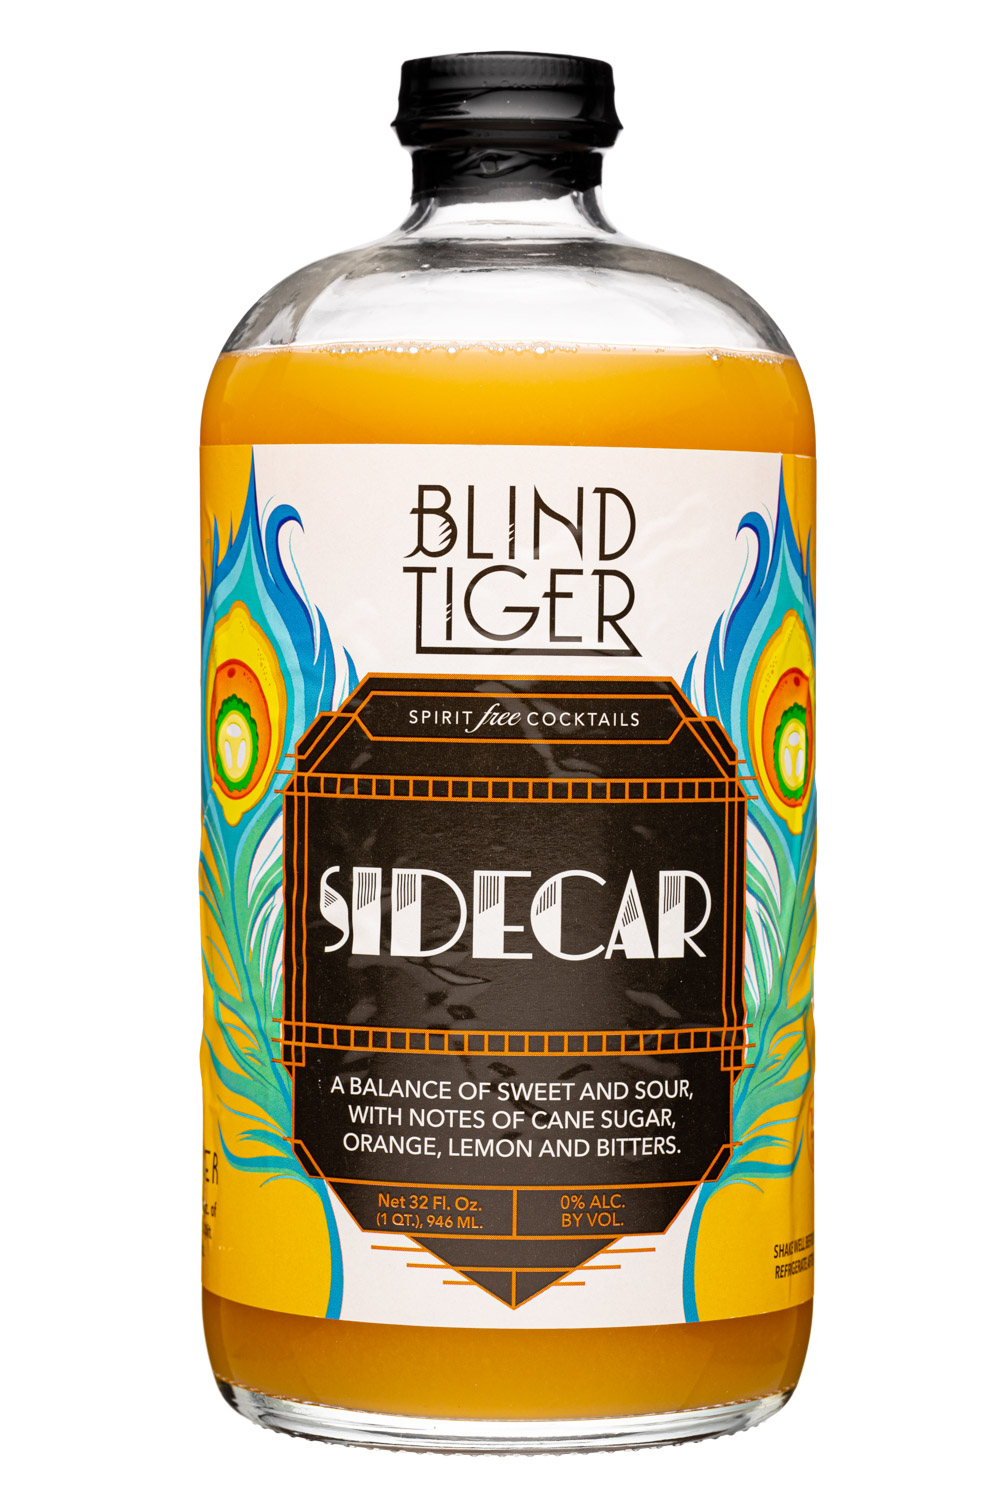 Blind Tiger Sidecar